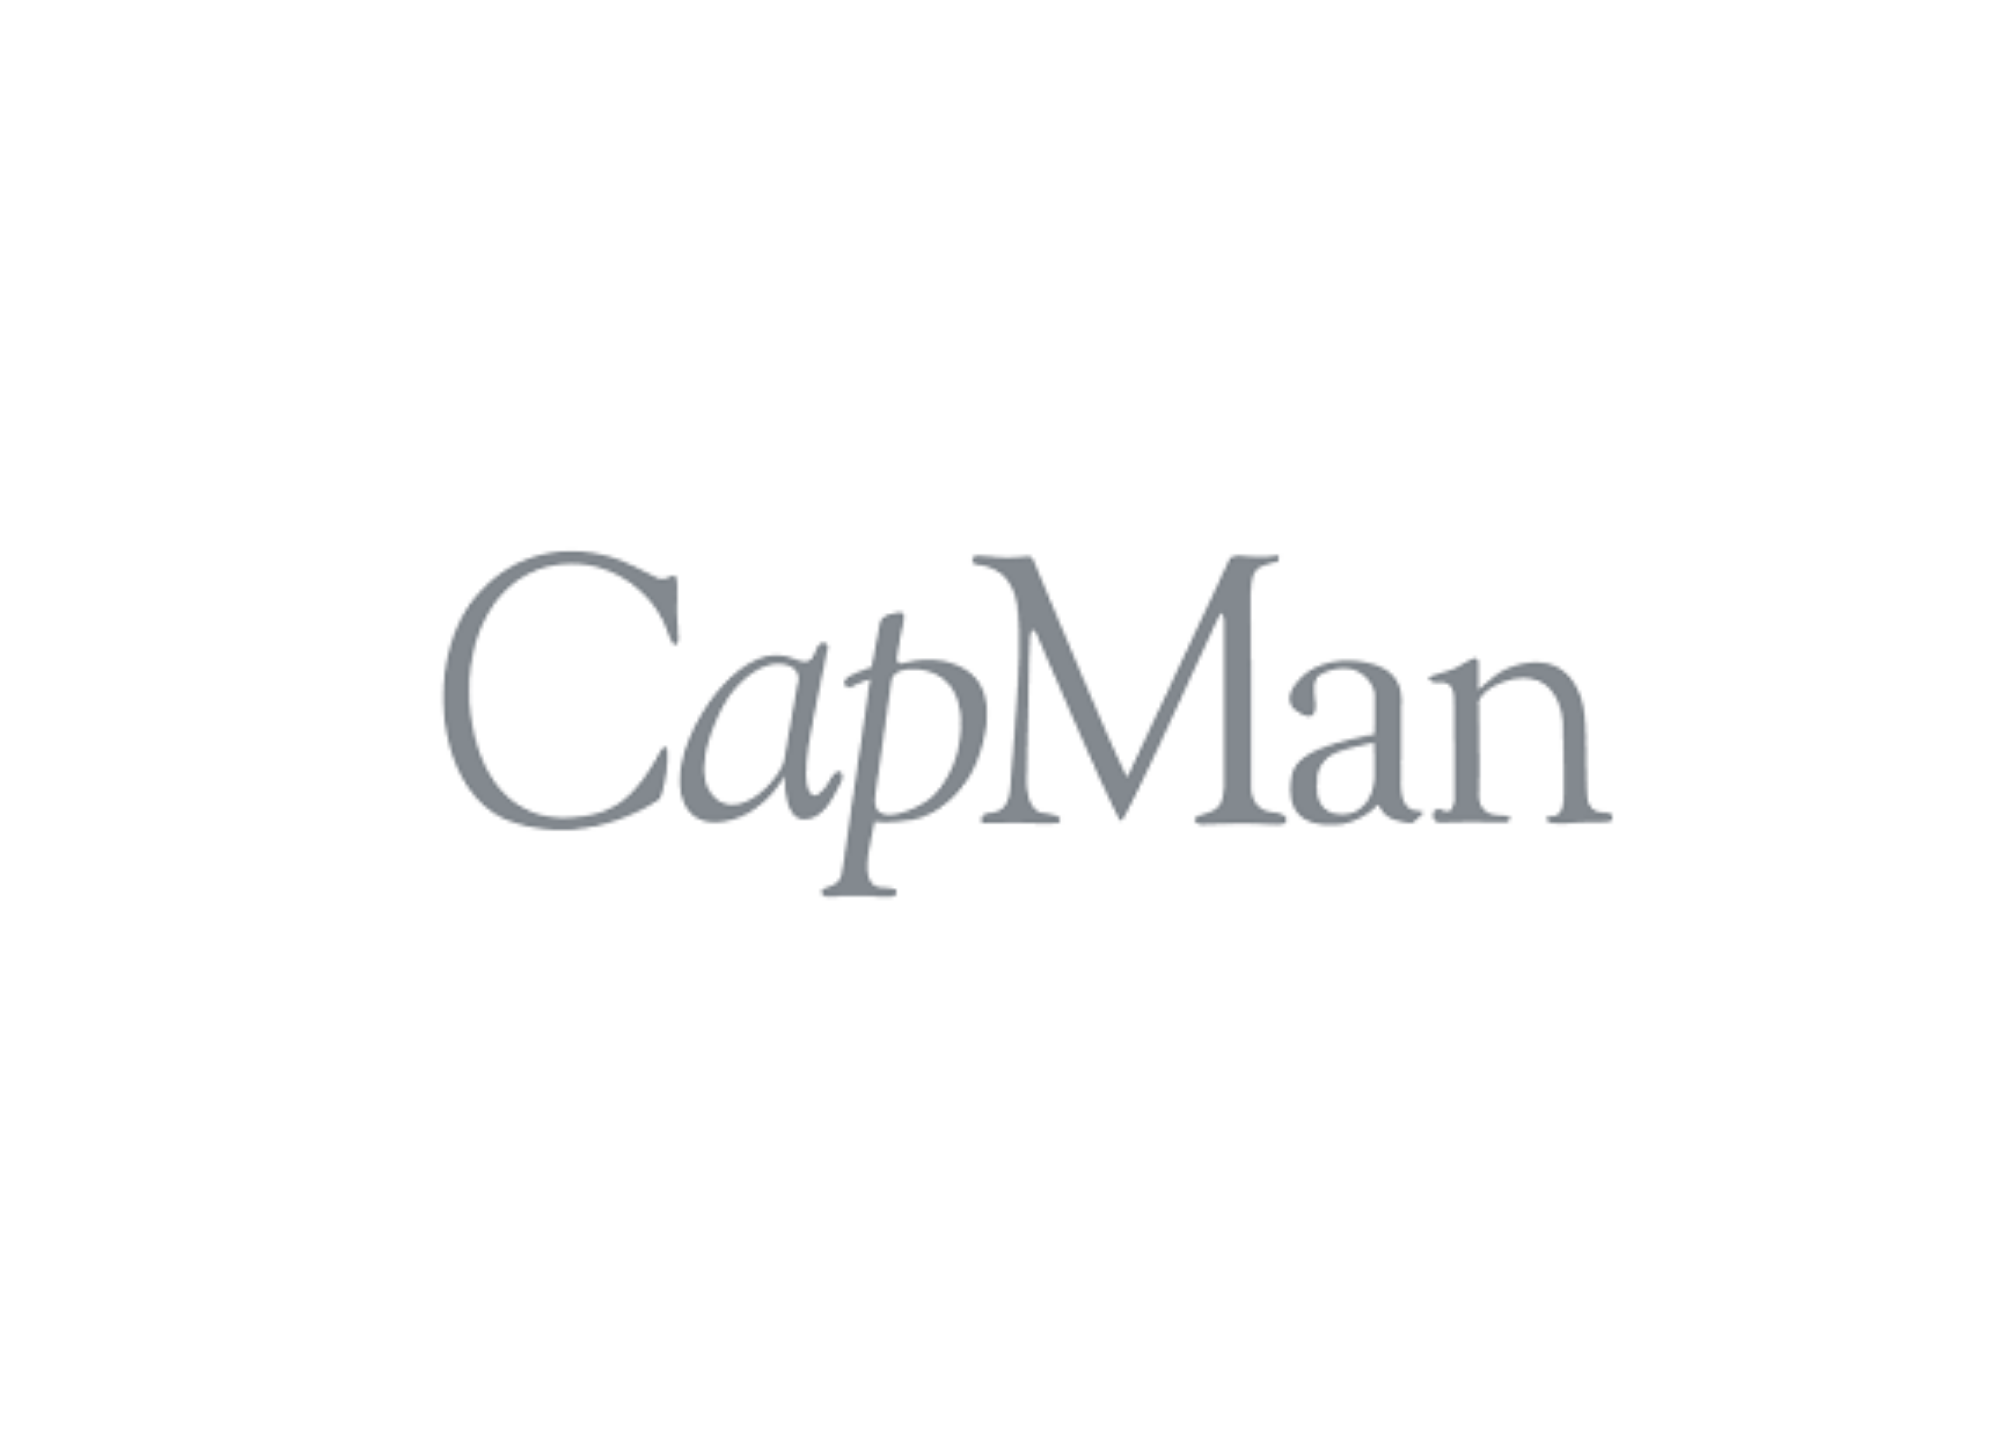 Capman logo nettisivuille